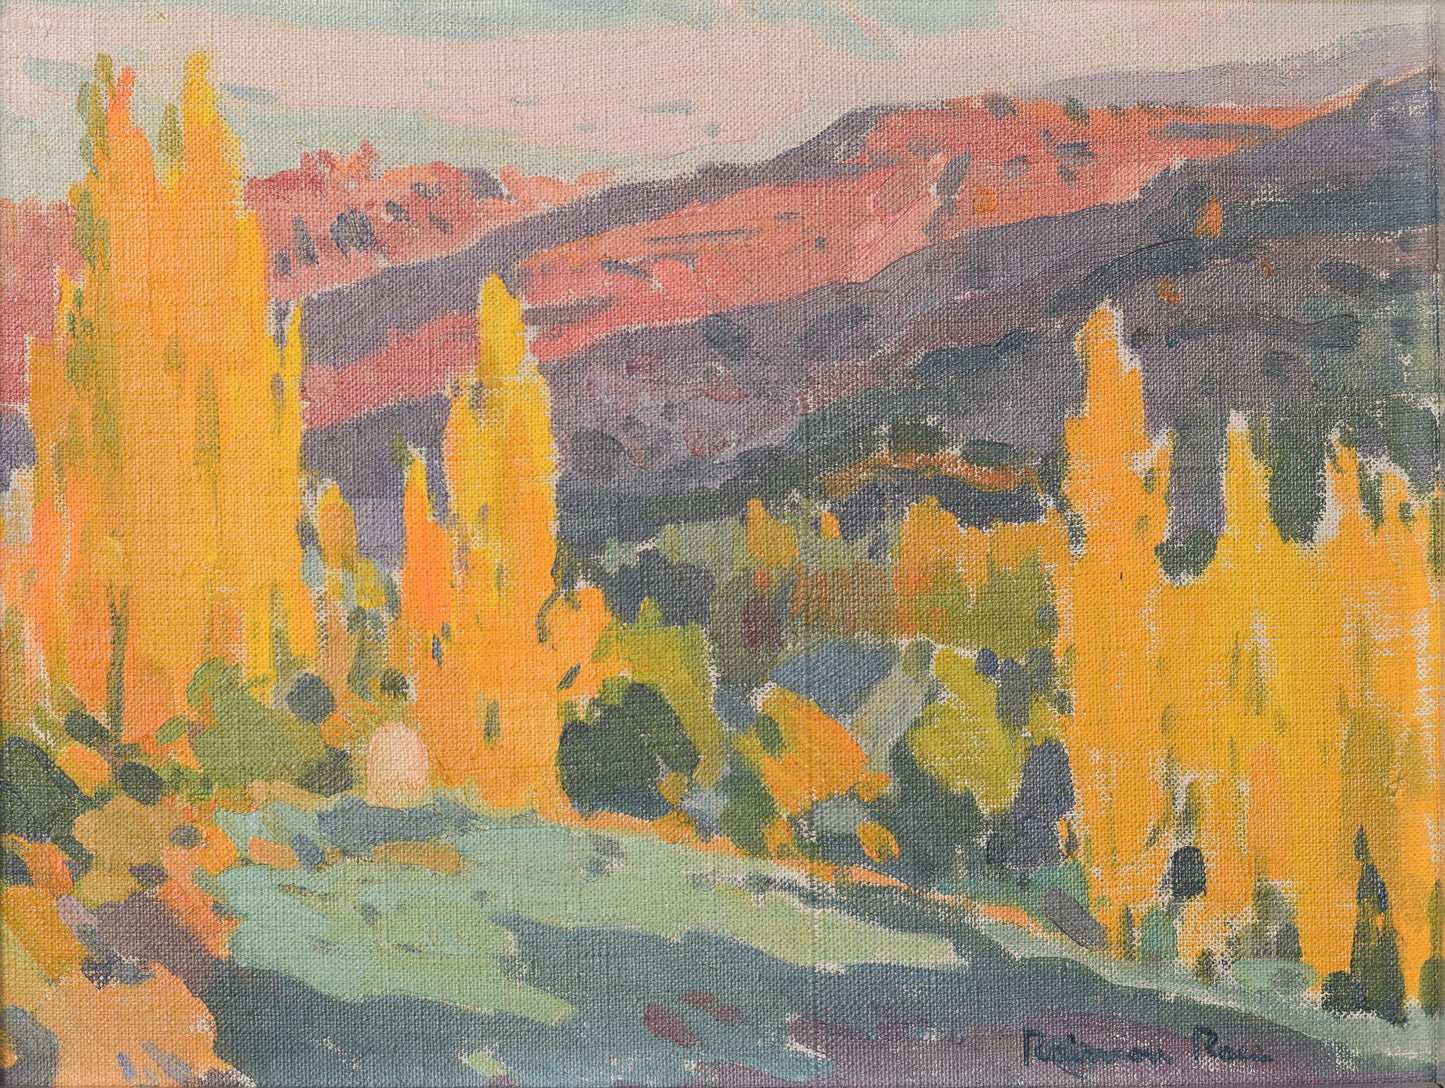 Raimon Roca Ricart (1917-2013) - Landscape "Martinet, La Cerdanya"